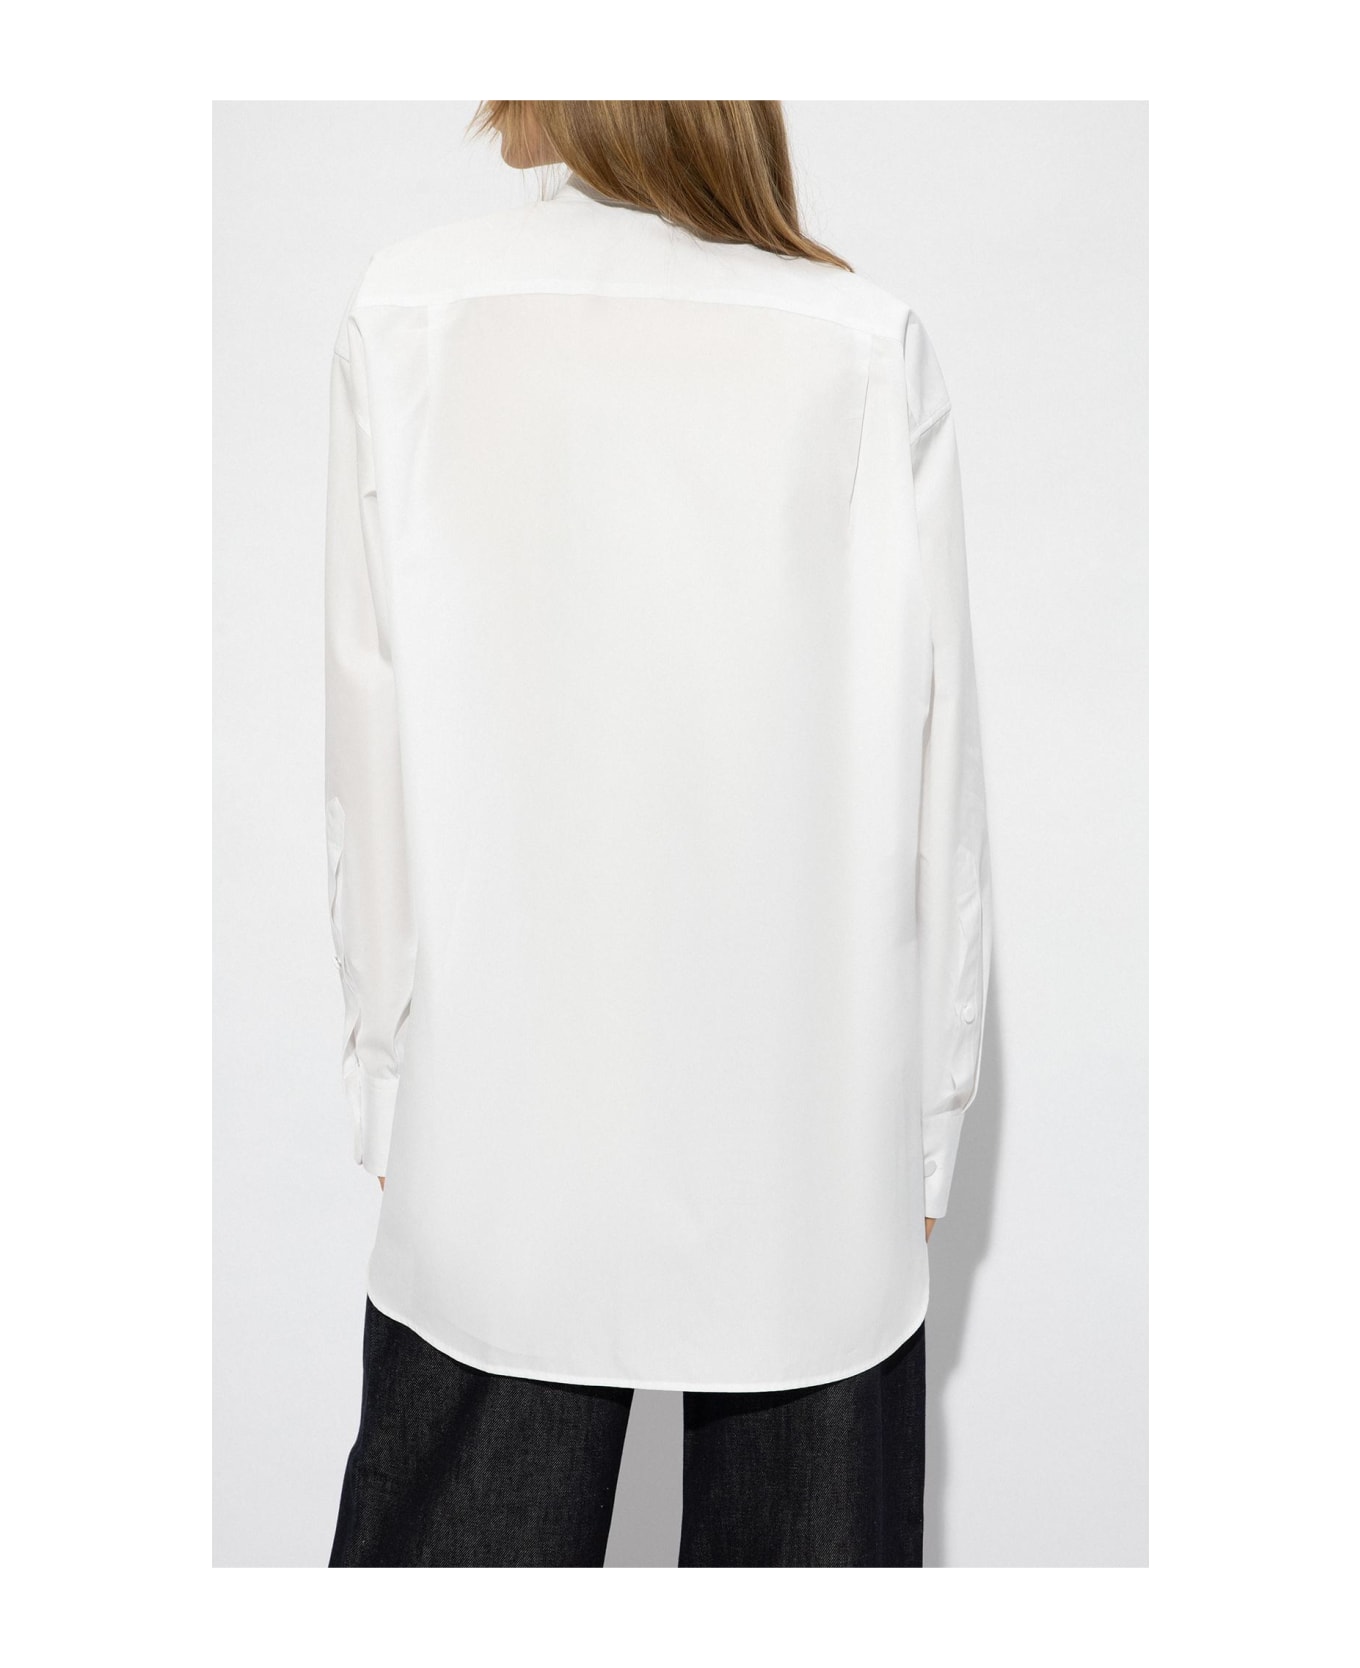 Stella McCartney Oversize Shirt - White